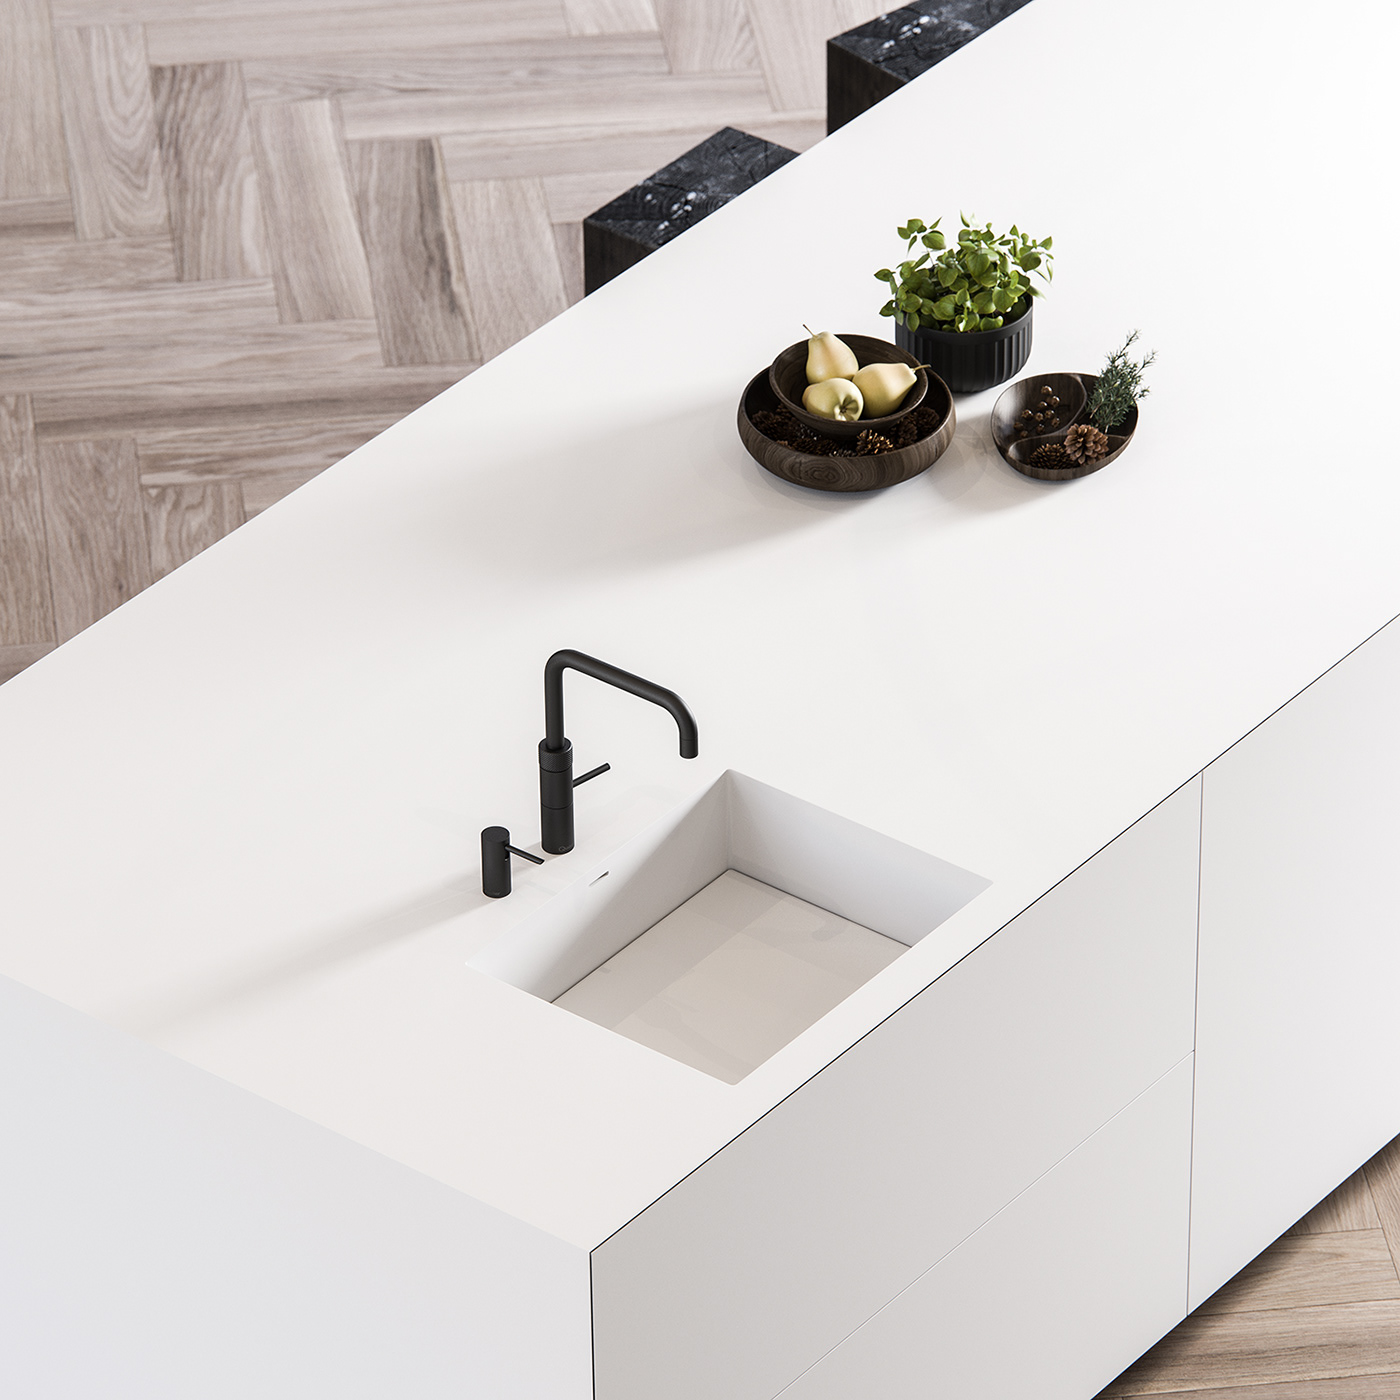 Interior design kitchen minimalist modern product visualization electronic appliance arch viz